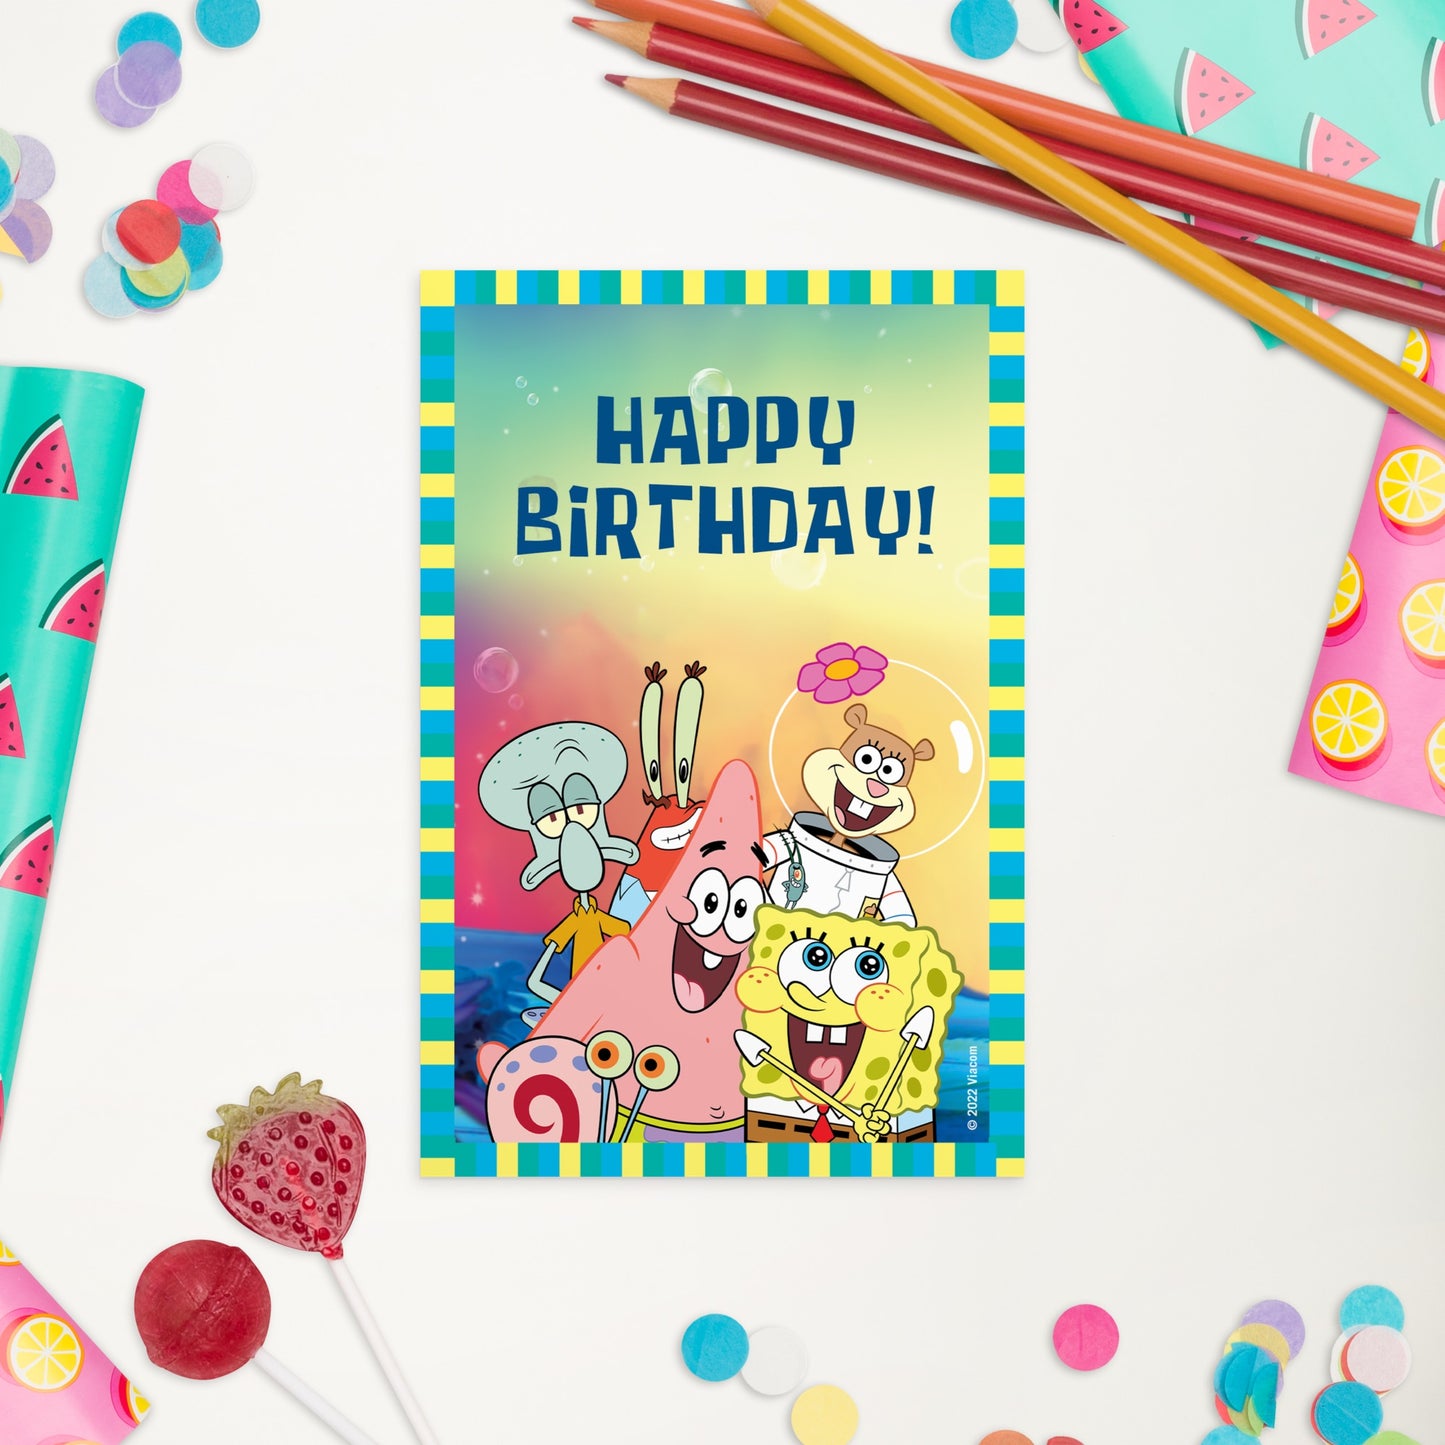 SpongeBob SquarePants Happy Birthday Card